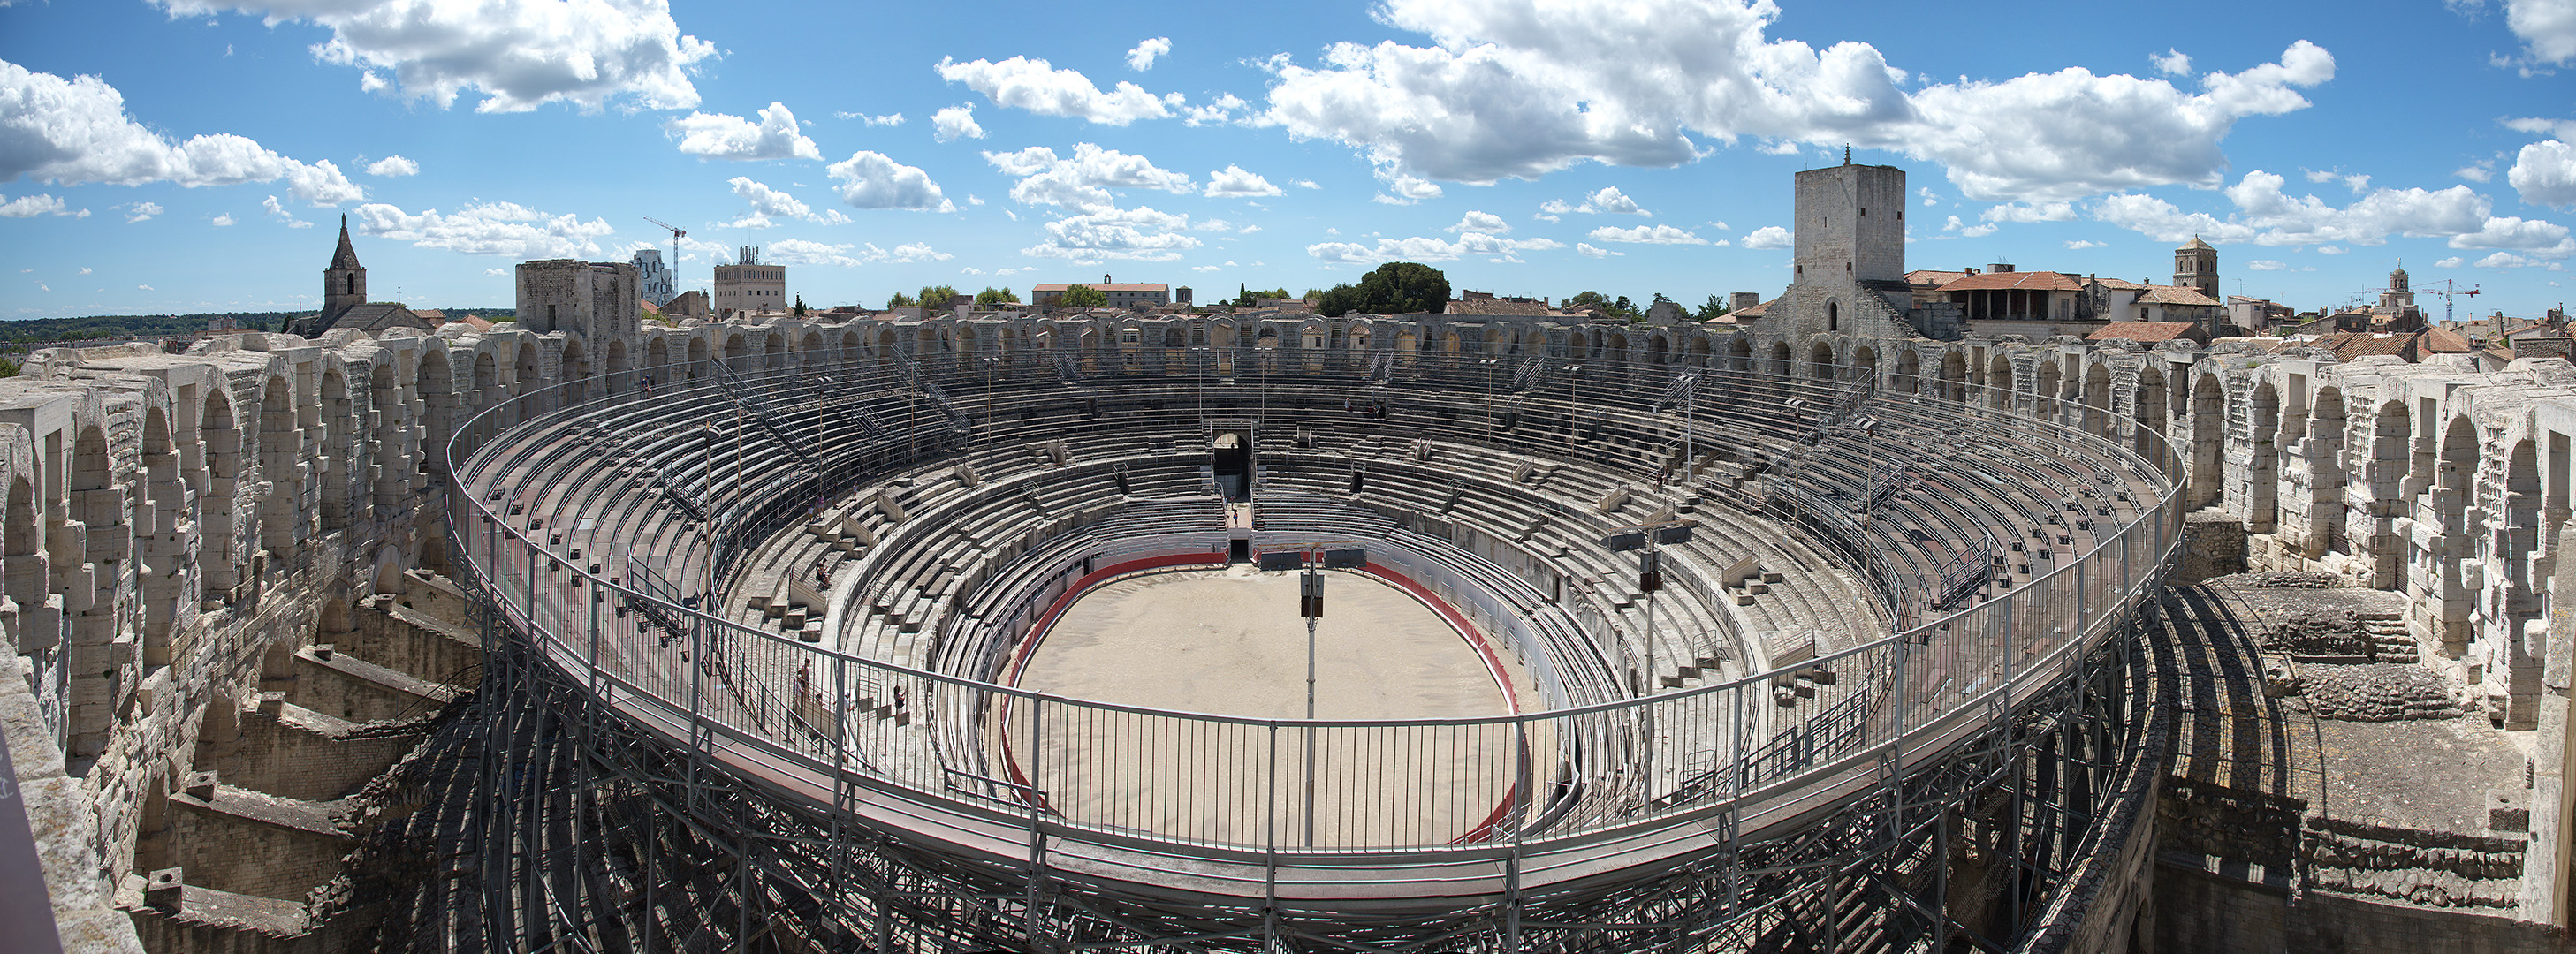 Arles Roman Theater (France)